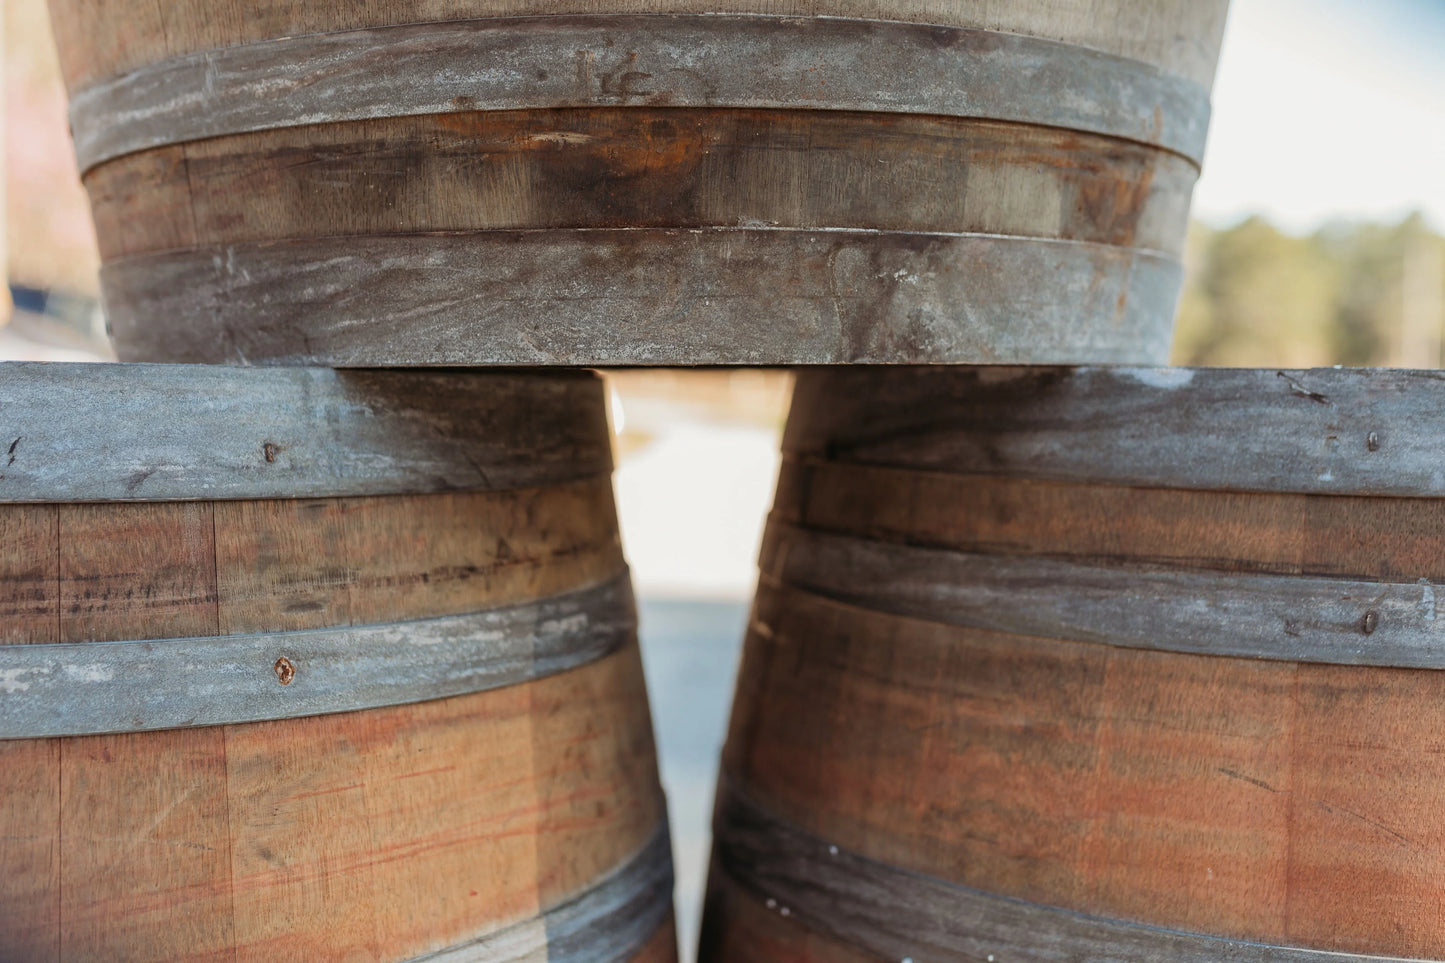 Barrels stacked up outside.